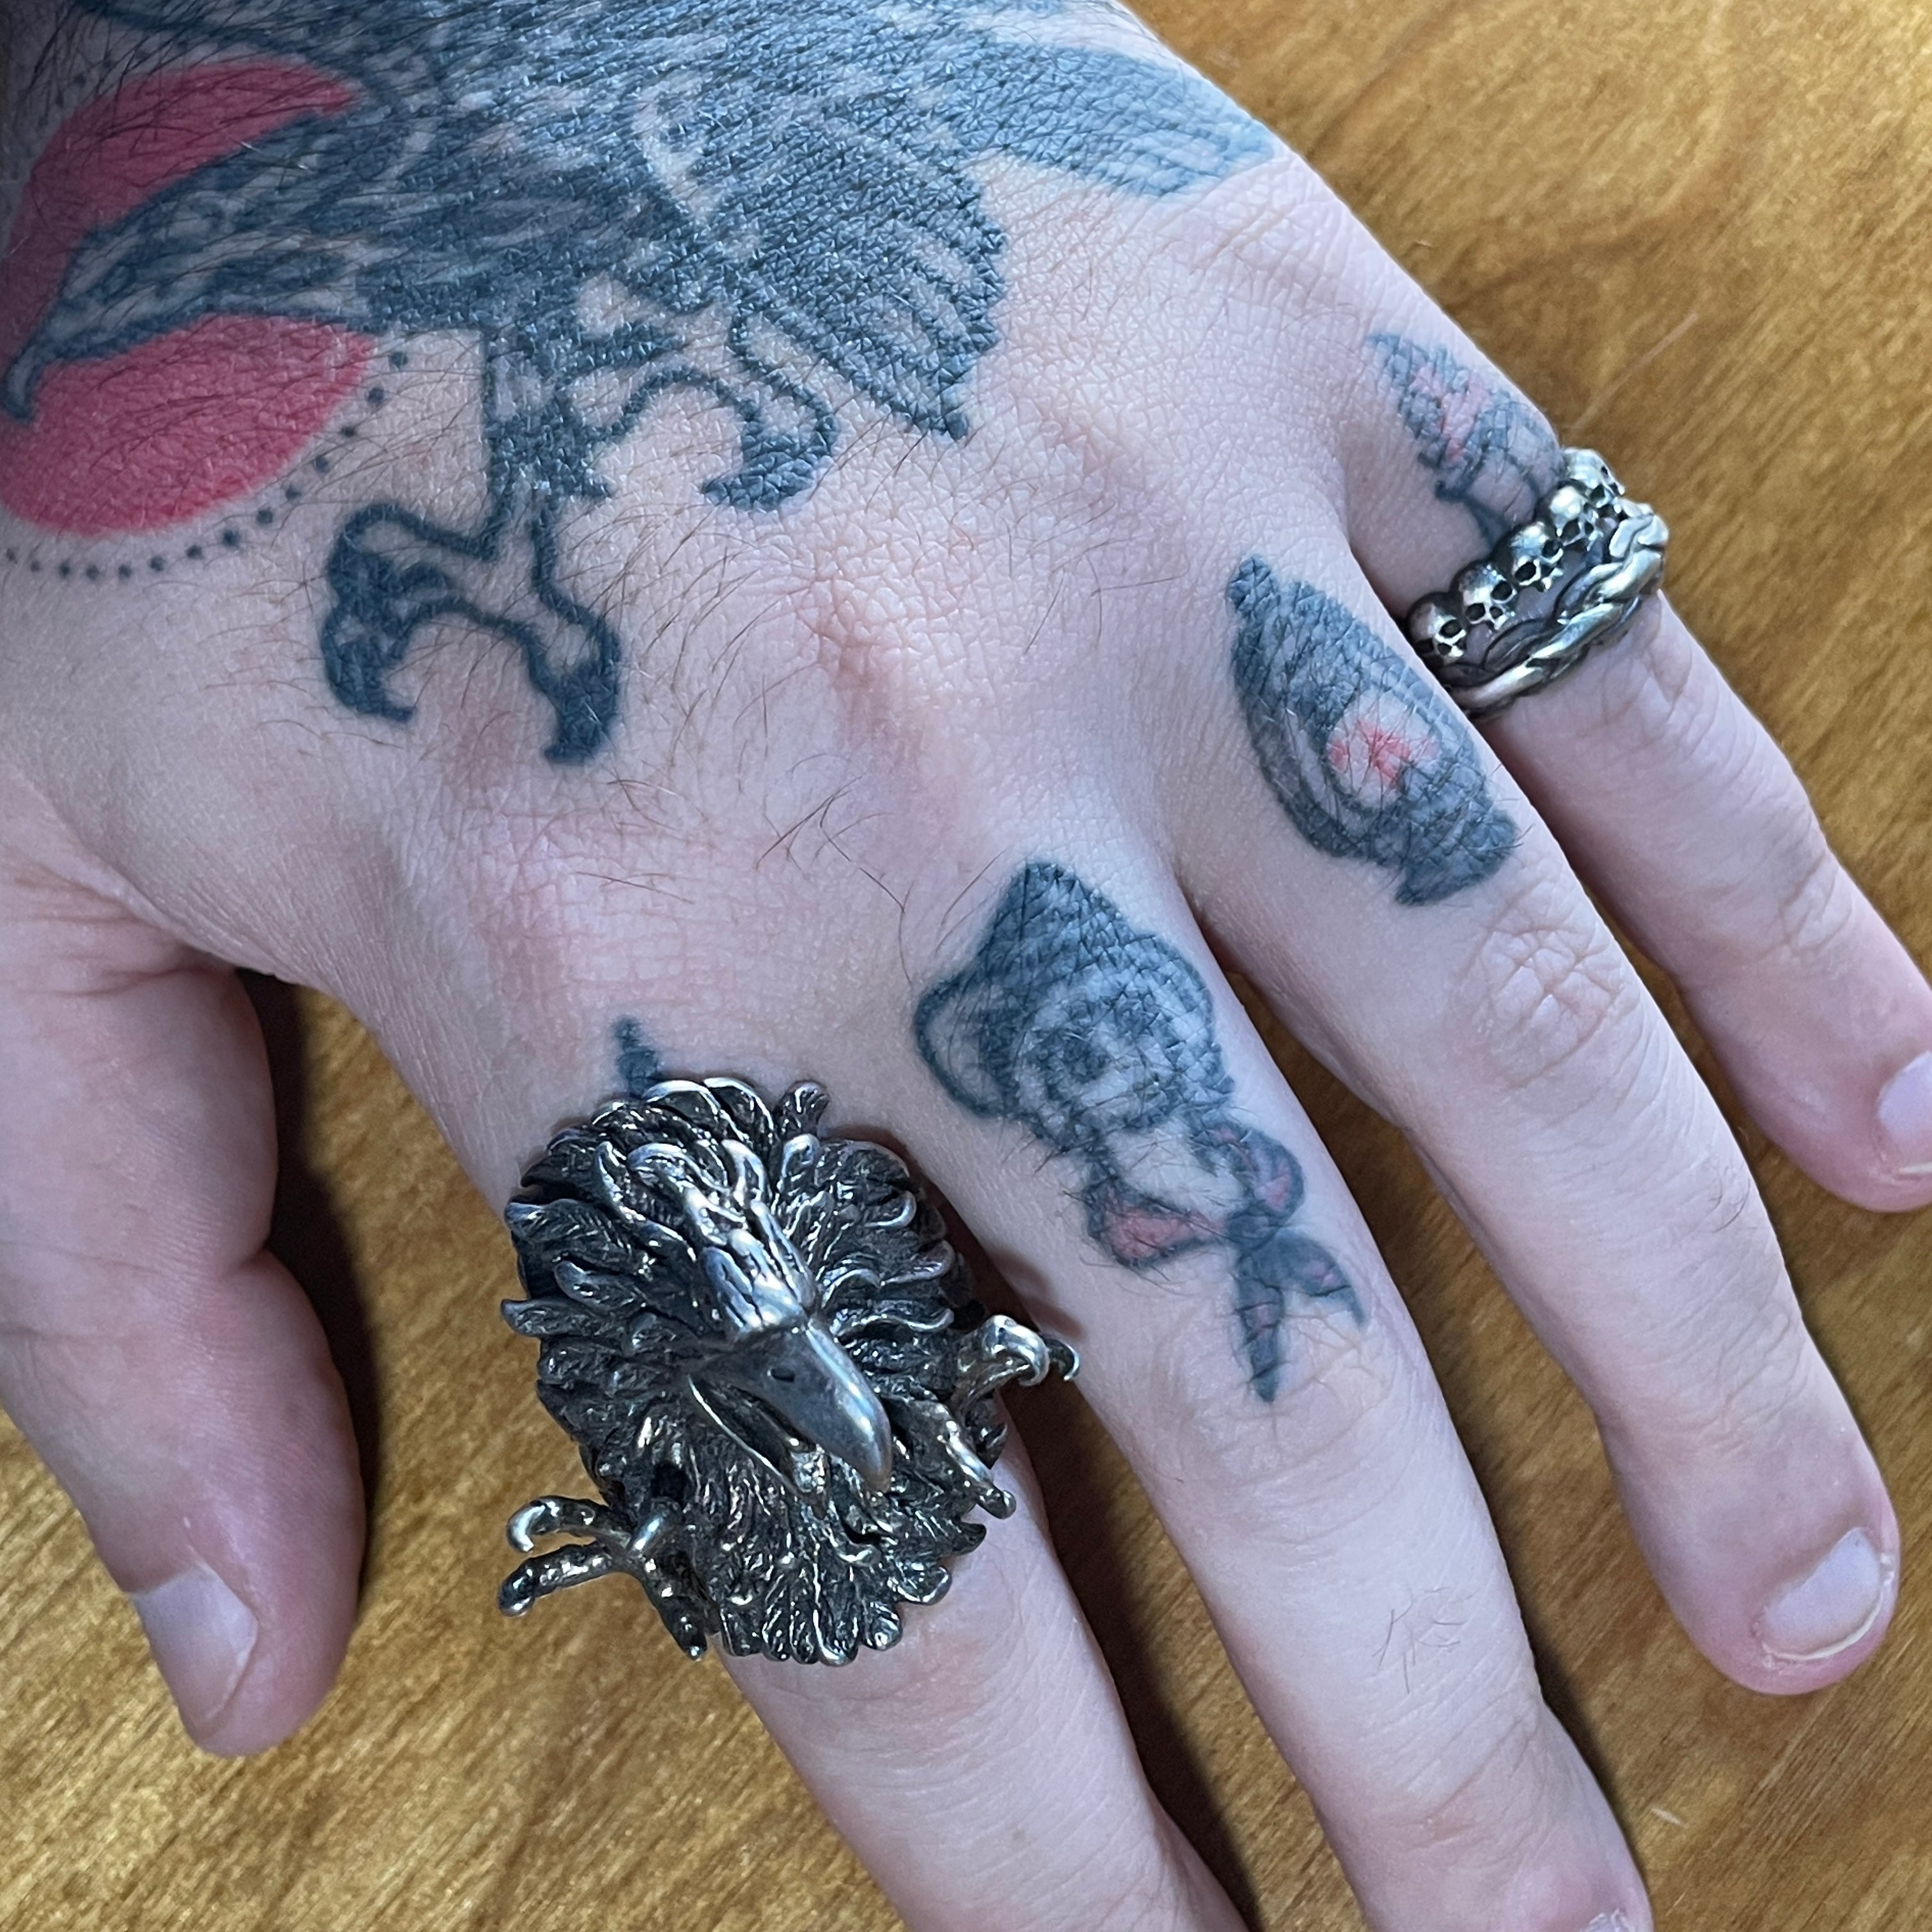 Tattoo uploaded by Filipe Lopes • Finger tattoos by Dave #tattoodo  #TattoodoApp #tattoodoBR #mini #minitattoo #tinytattoo #colorida #colorful  #caveira #skull #adaga #dagger #ancora #anchor #barco #ship #coração #heart  #aguia #eagle #tigre #tiger #